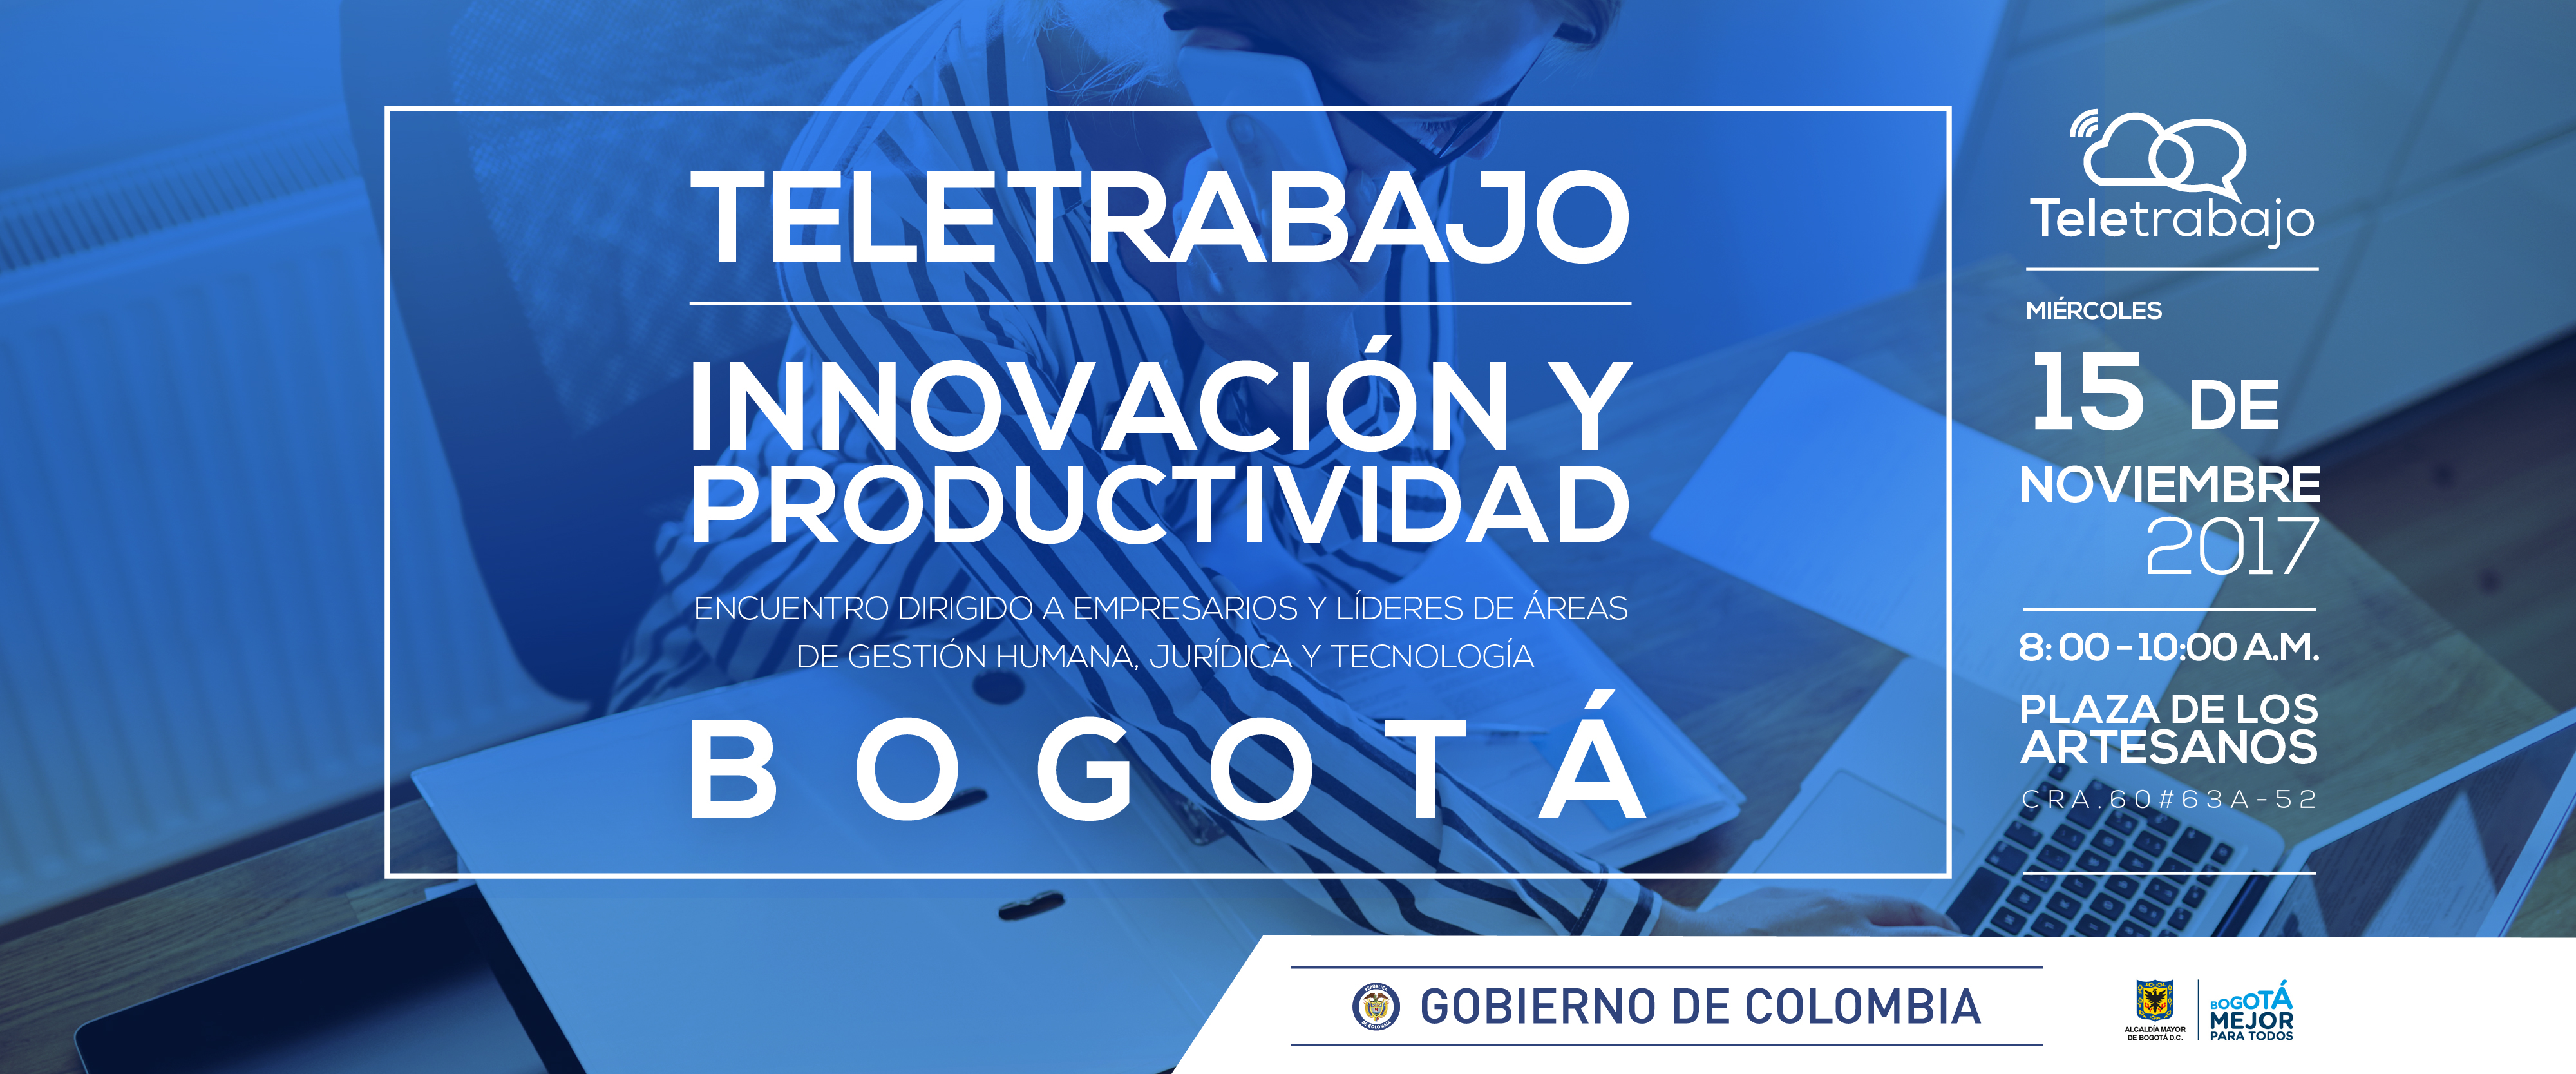 Taller de Teletrabajo gratuito en Bogotá